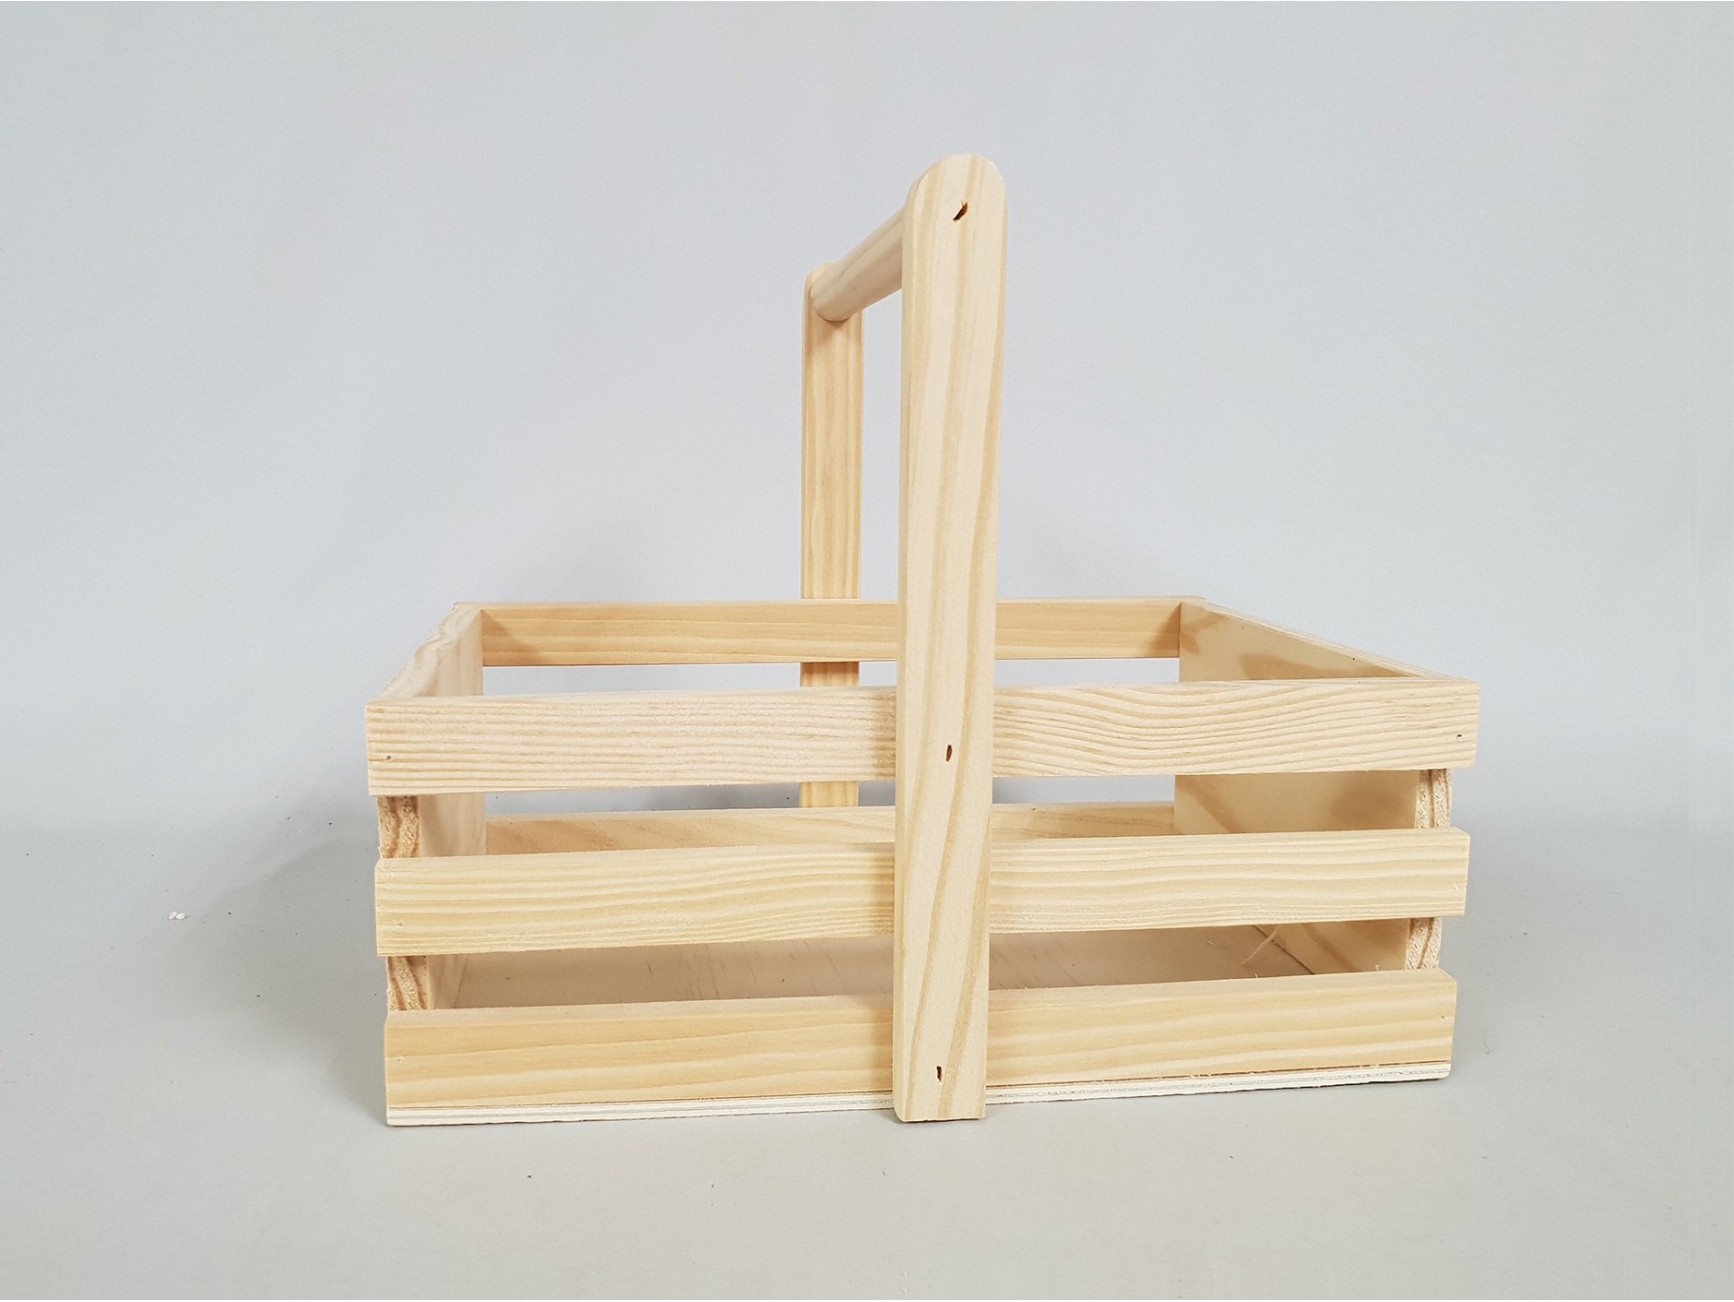 Caja Cesta de madera 3 listones 30x21x10 cm. c/asas Ref.AR16311 - Mabaonline